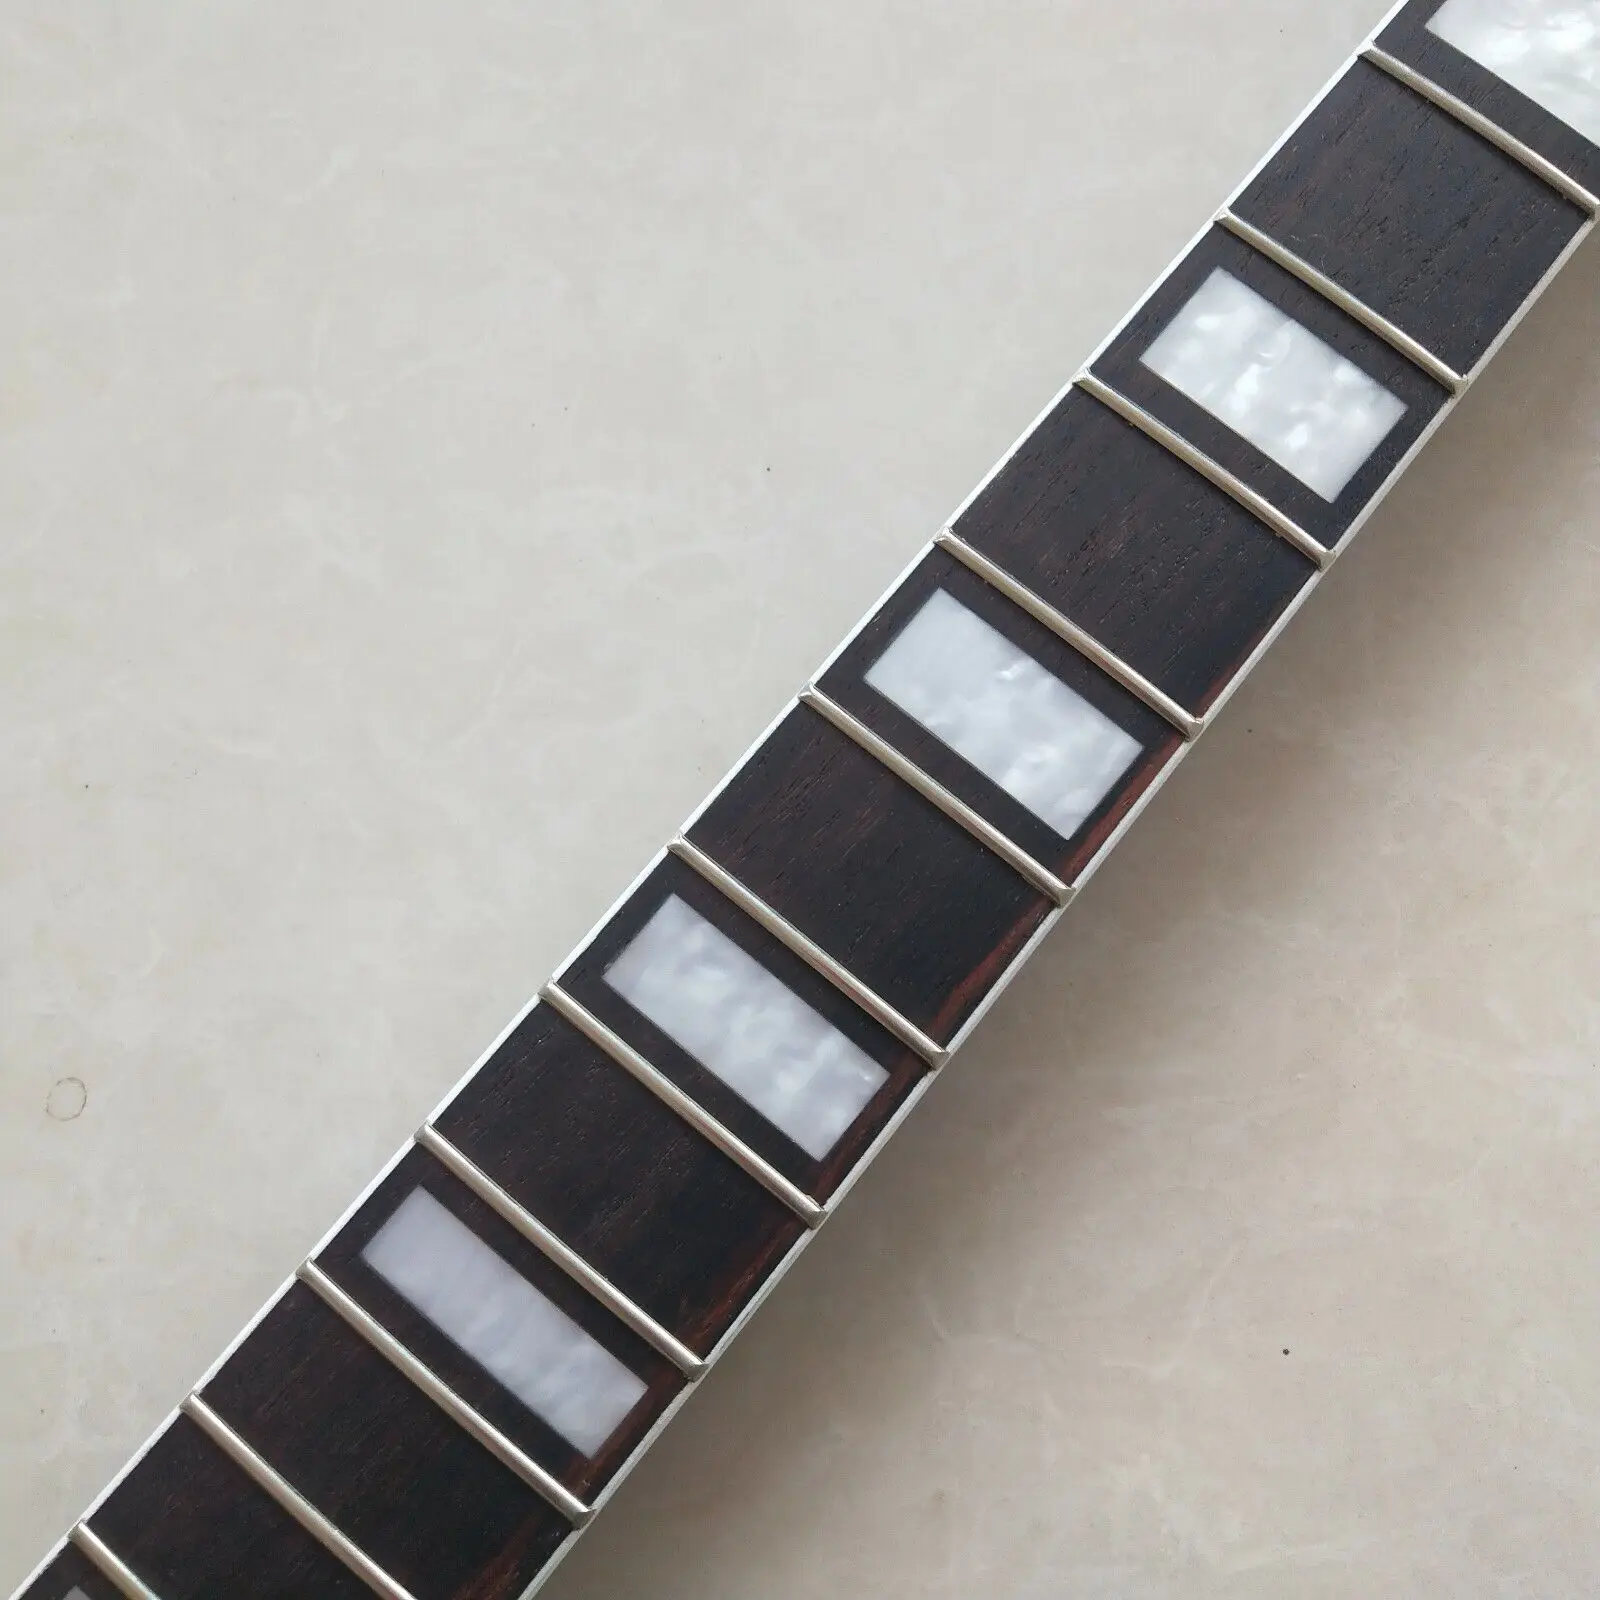 22 Frets Black Reverse head Electric Guitar Neck Maple Rosewood Fretboard Inlay enlarge